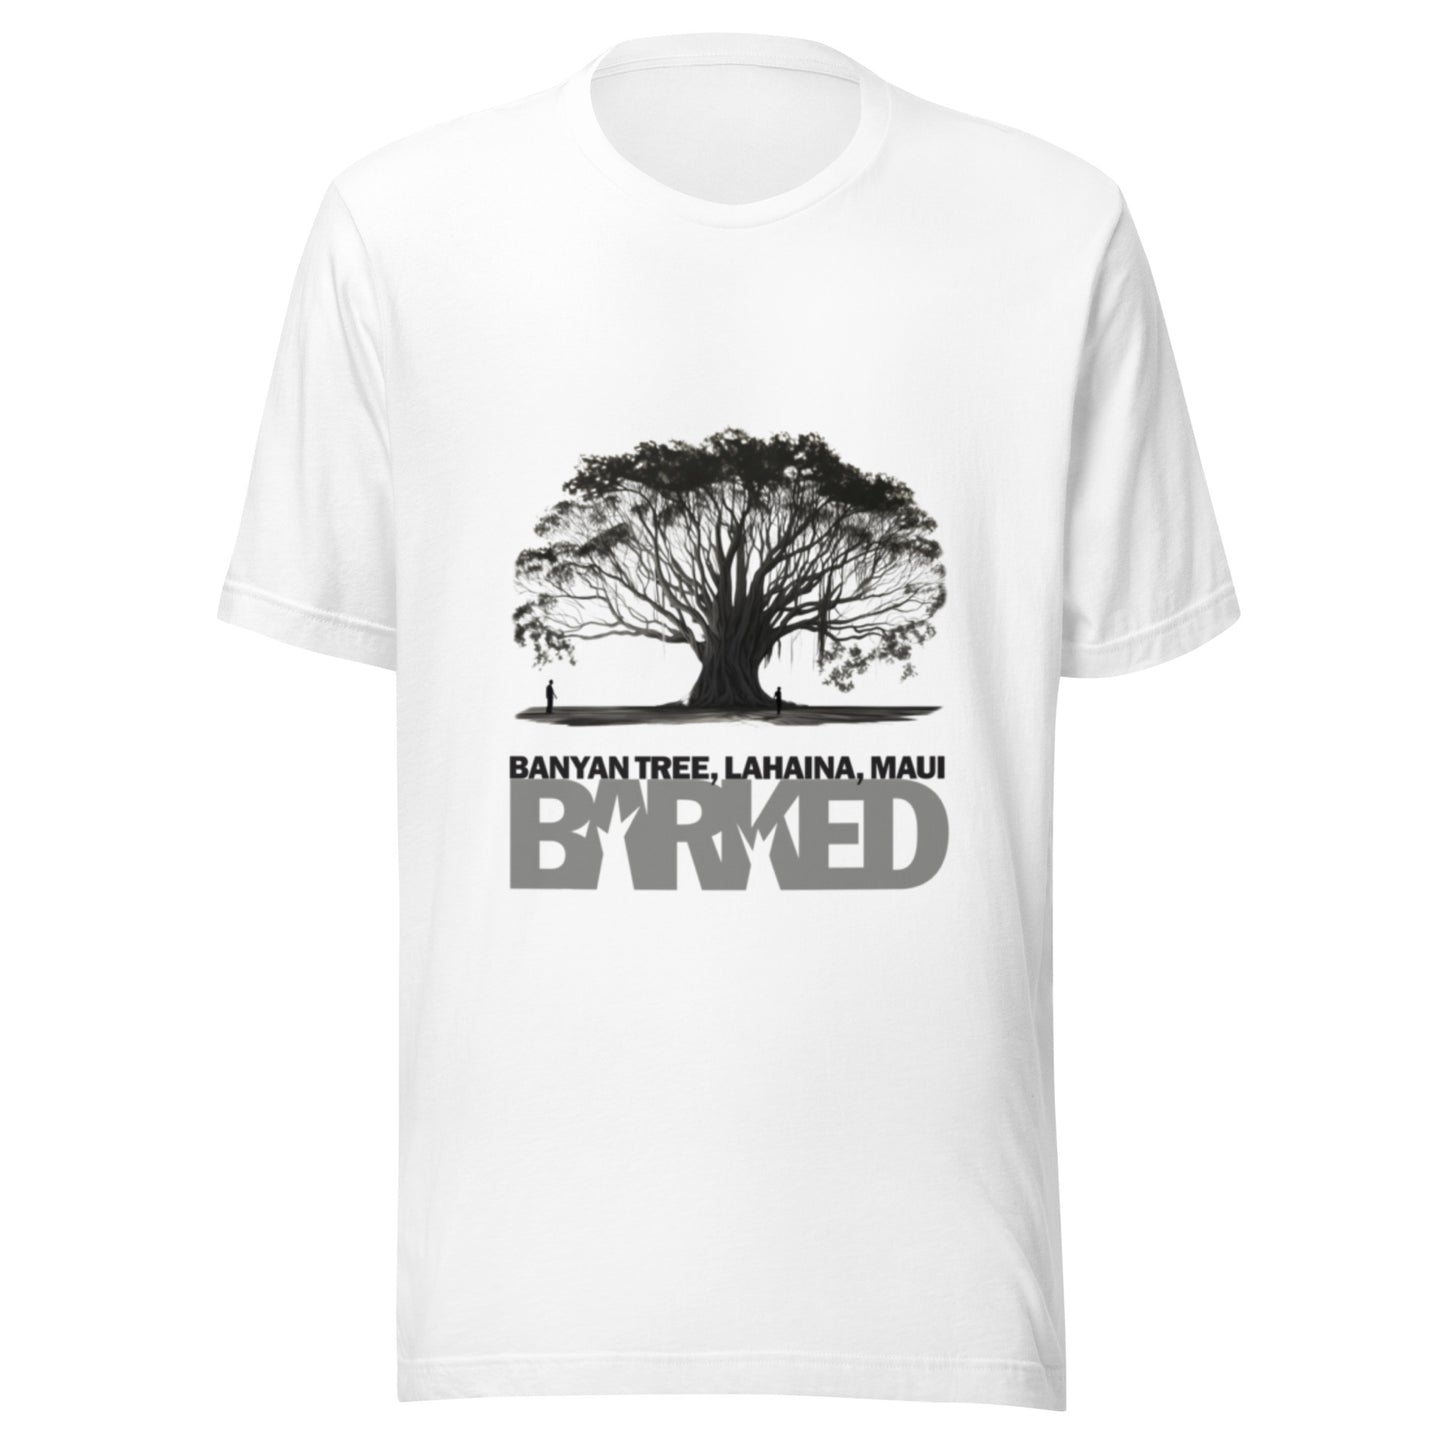 T-Shirt—Barked Maui Banyan Tree Memorial 2—Hawaii